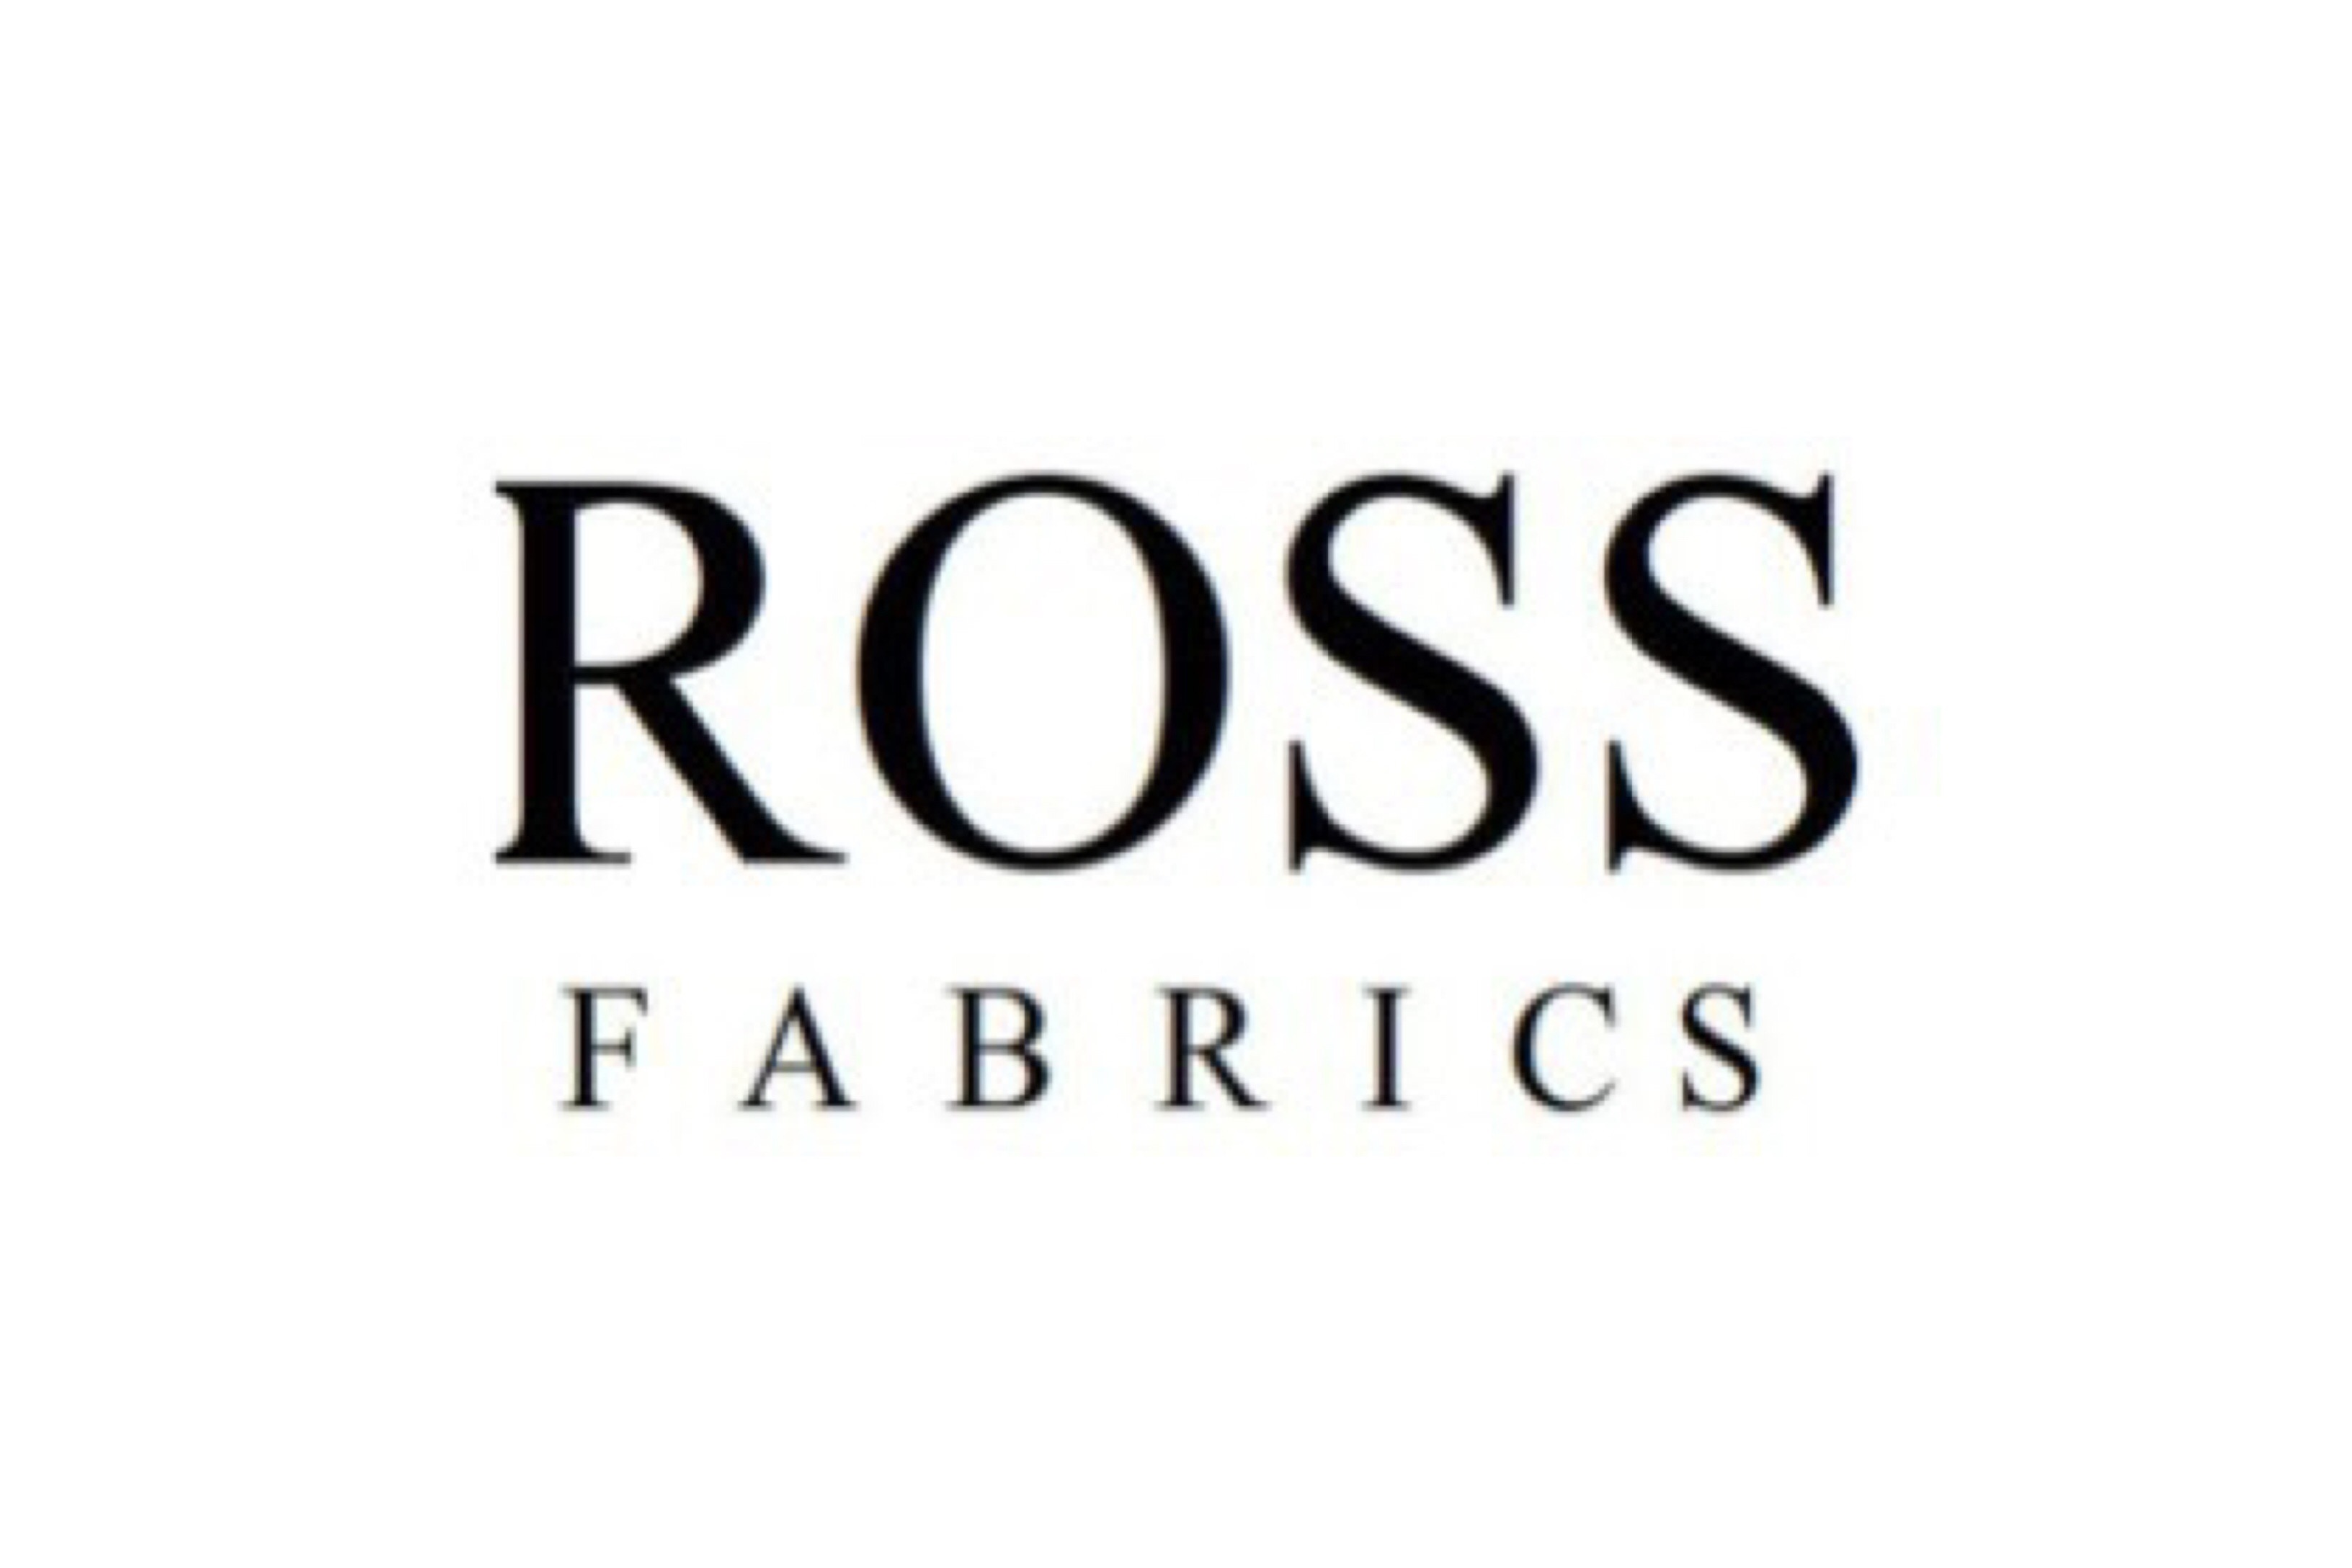 Ross Fabrics